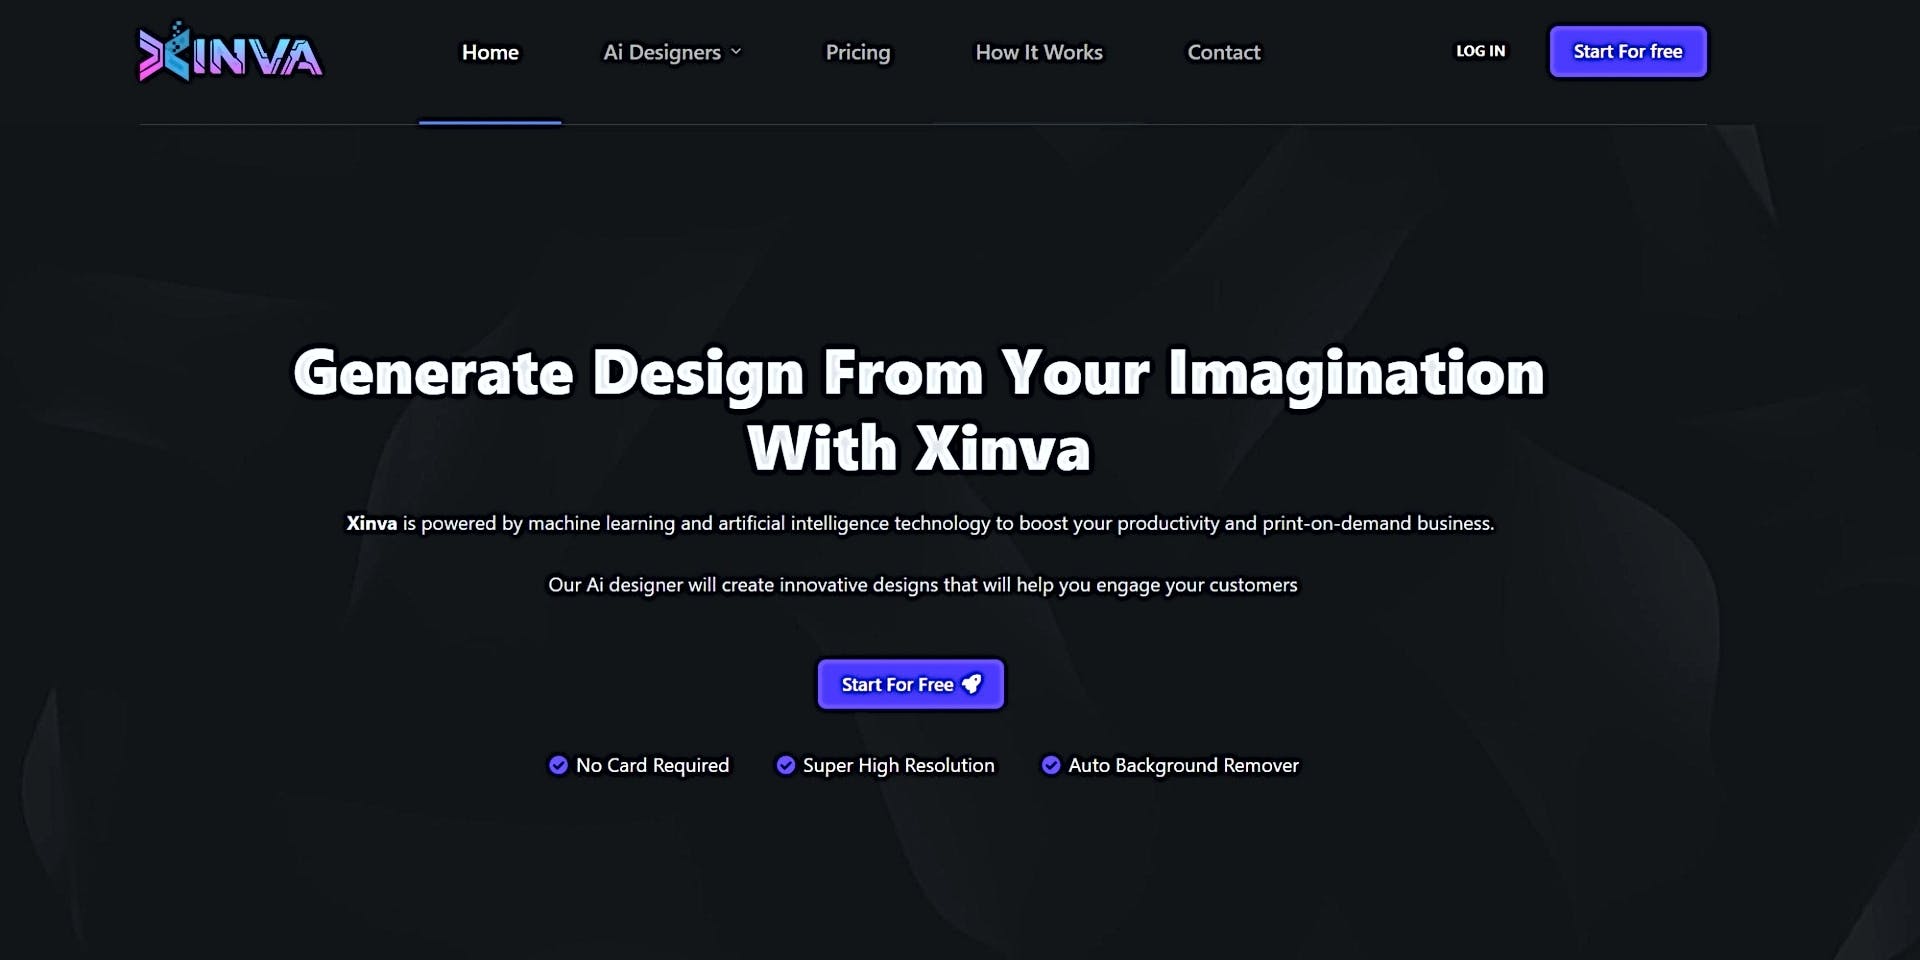 Xinva featured